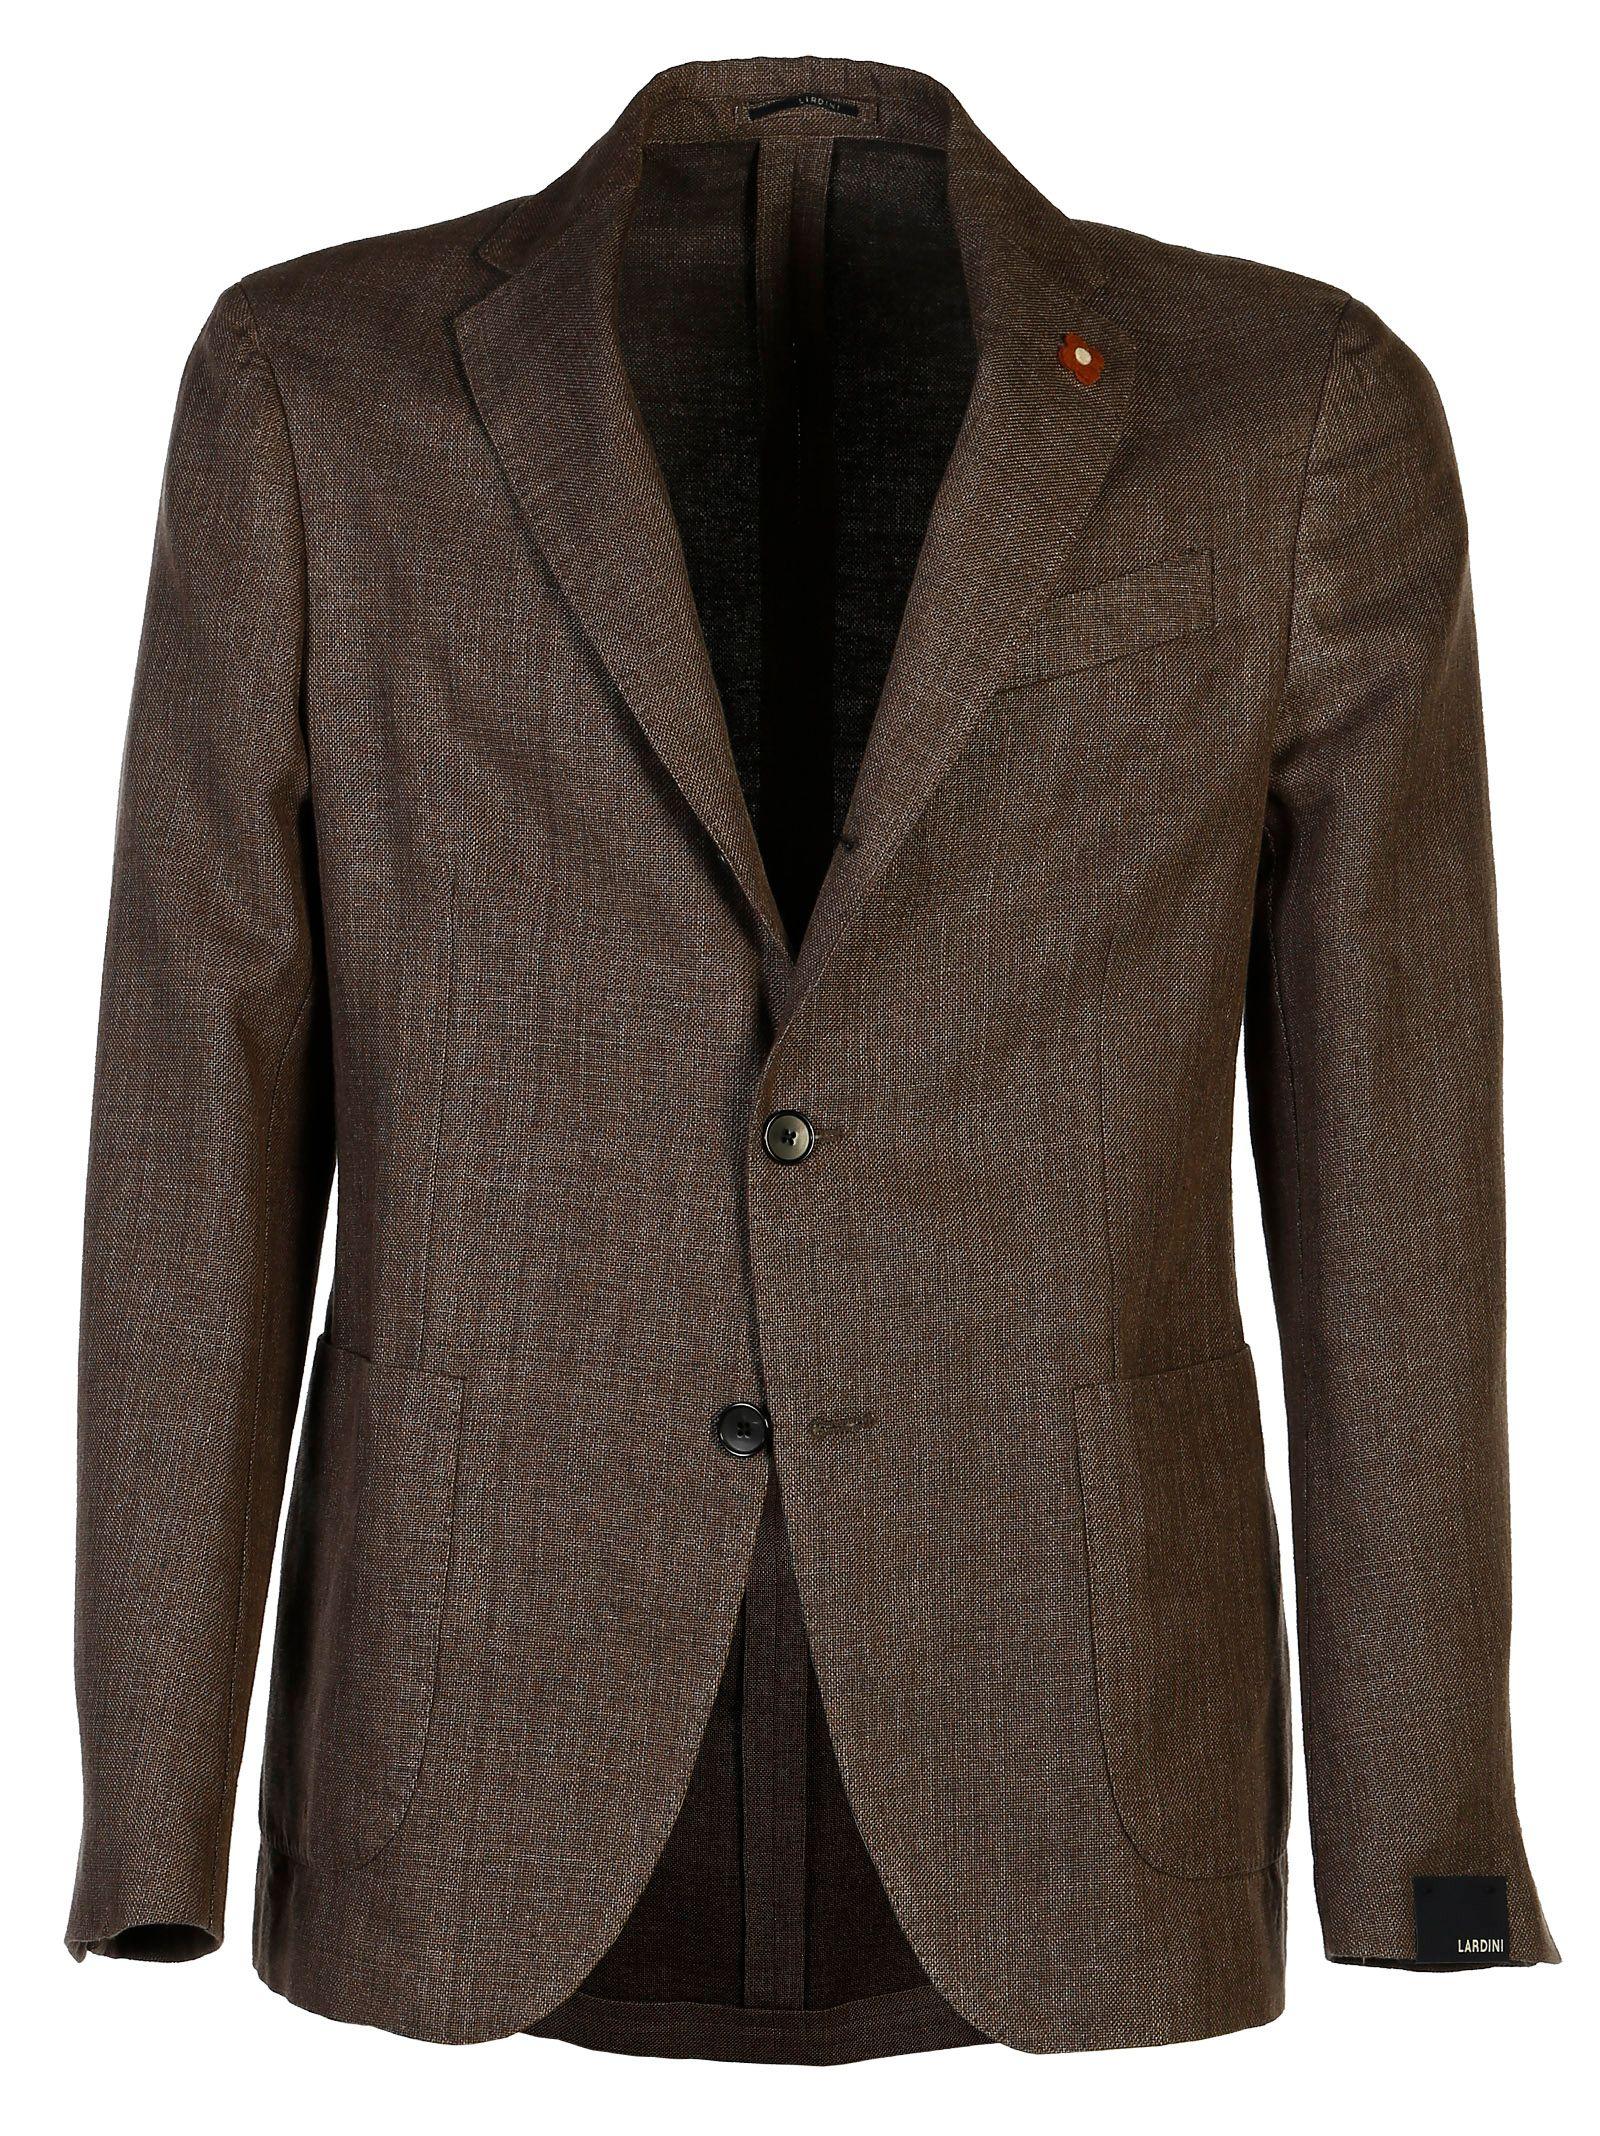 Lardini Brown Cotton Blazer in Brown for Men - Lyst